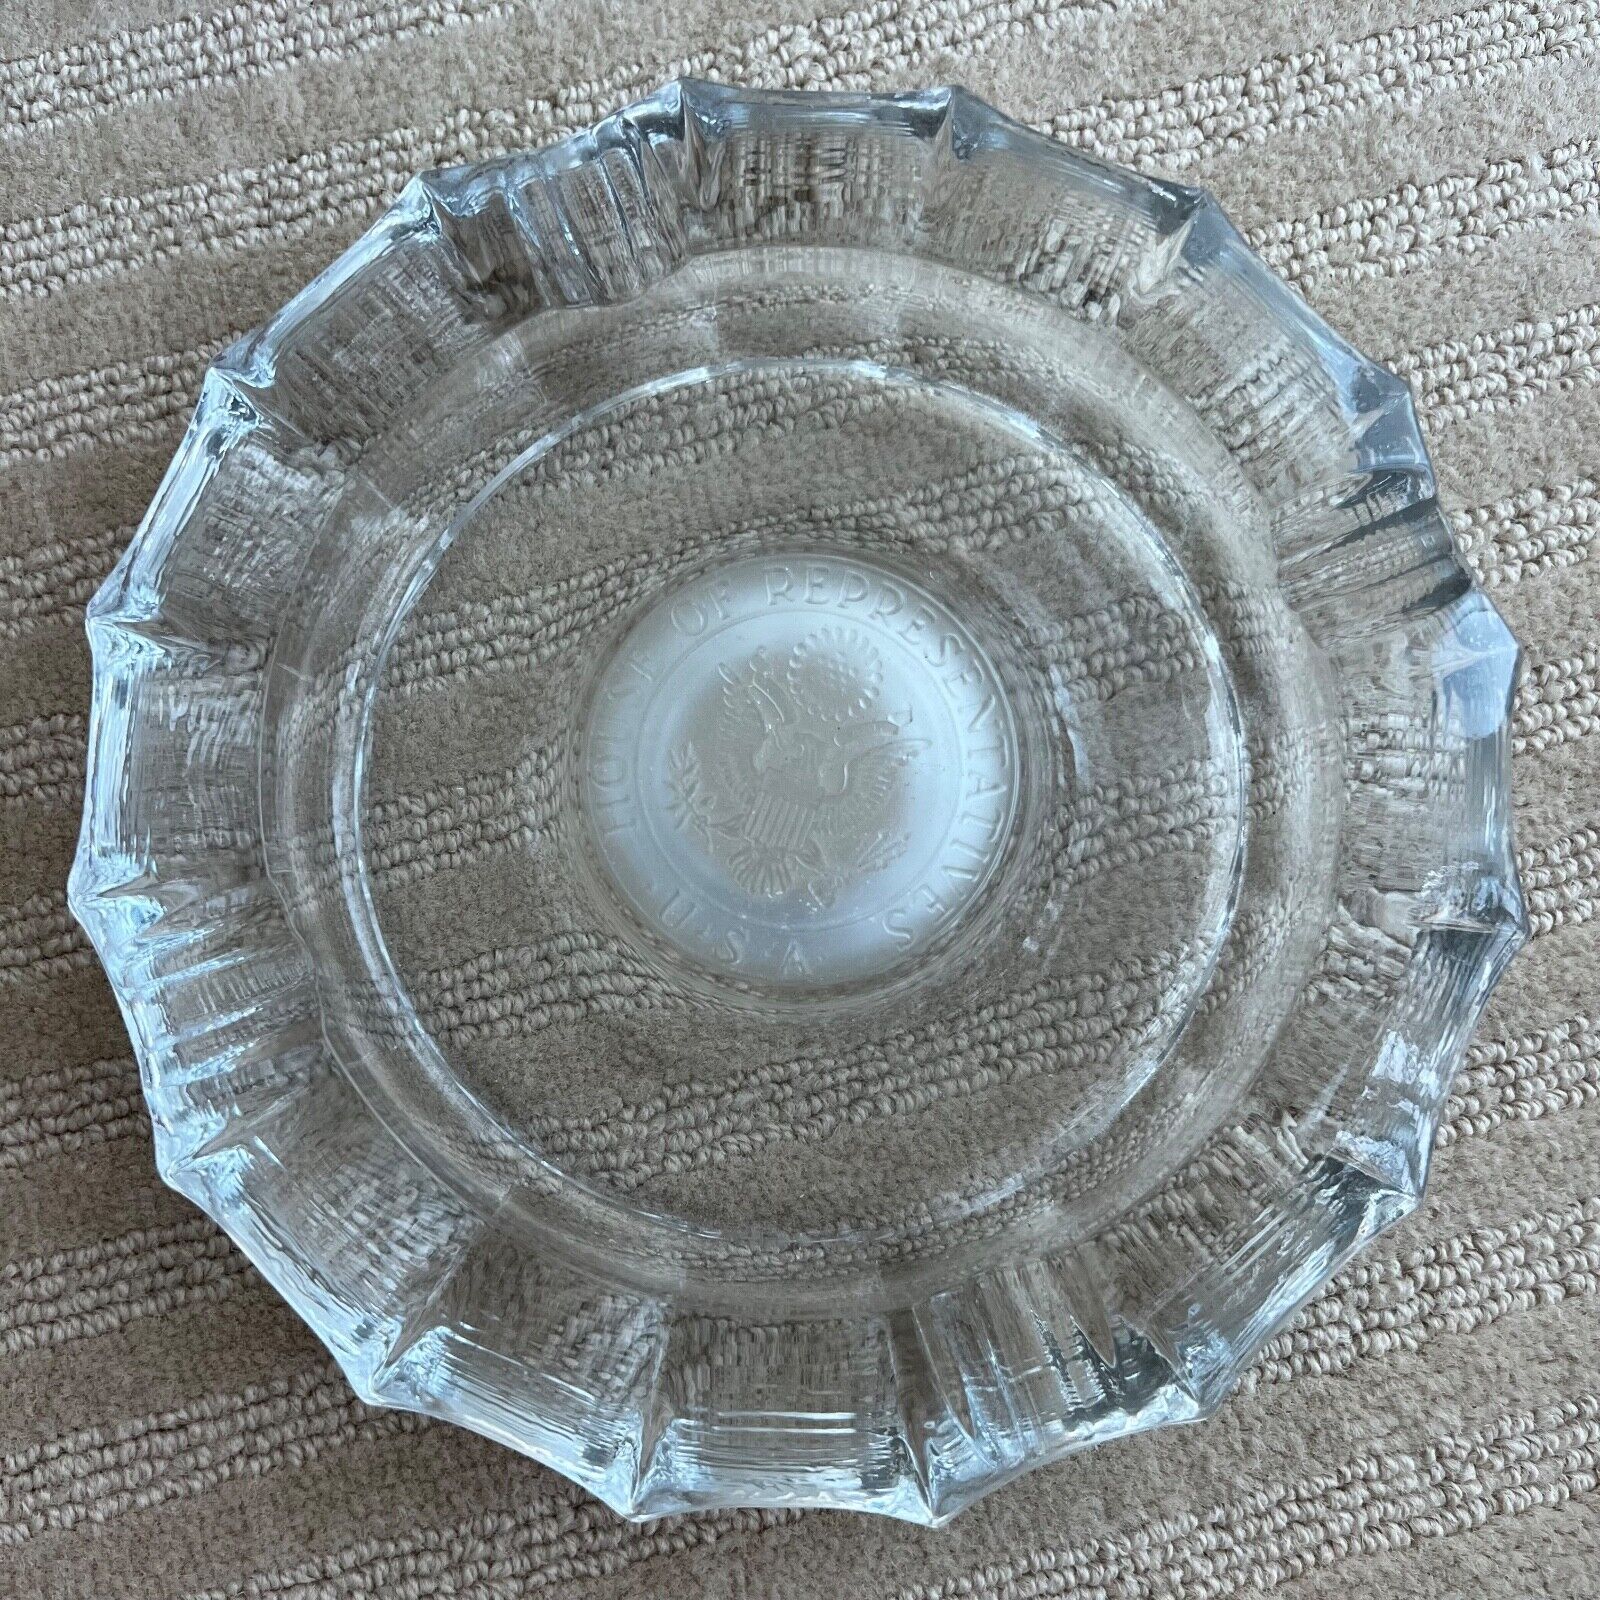 House of Representatives Official USA glass ashtray, 7.5" round, vintage Без бренда - фотография #2